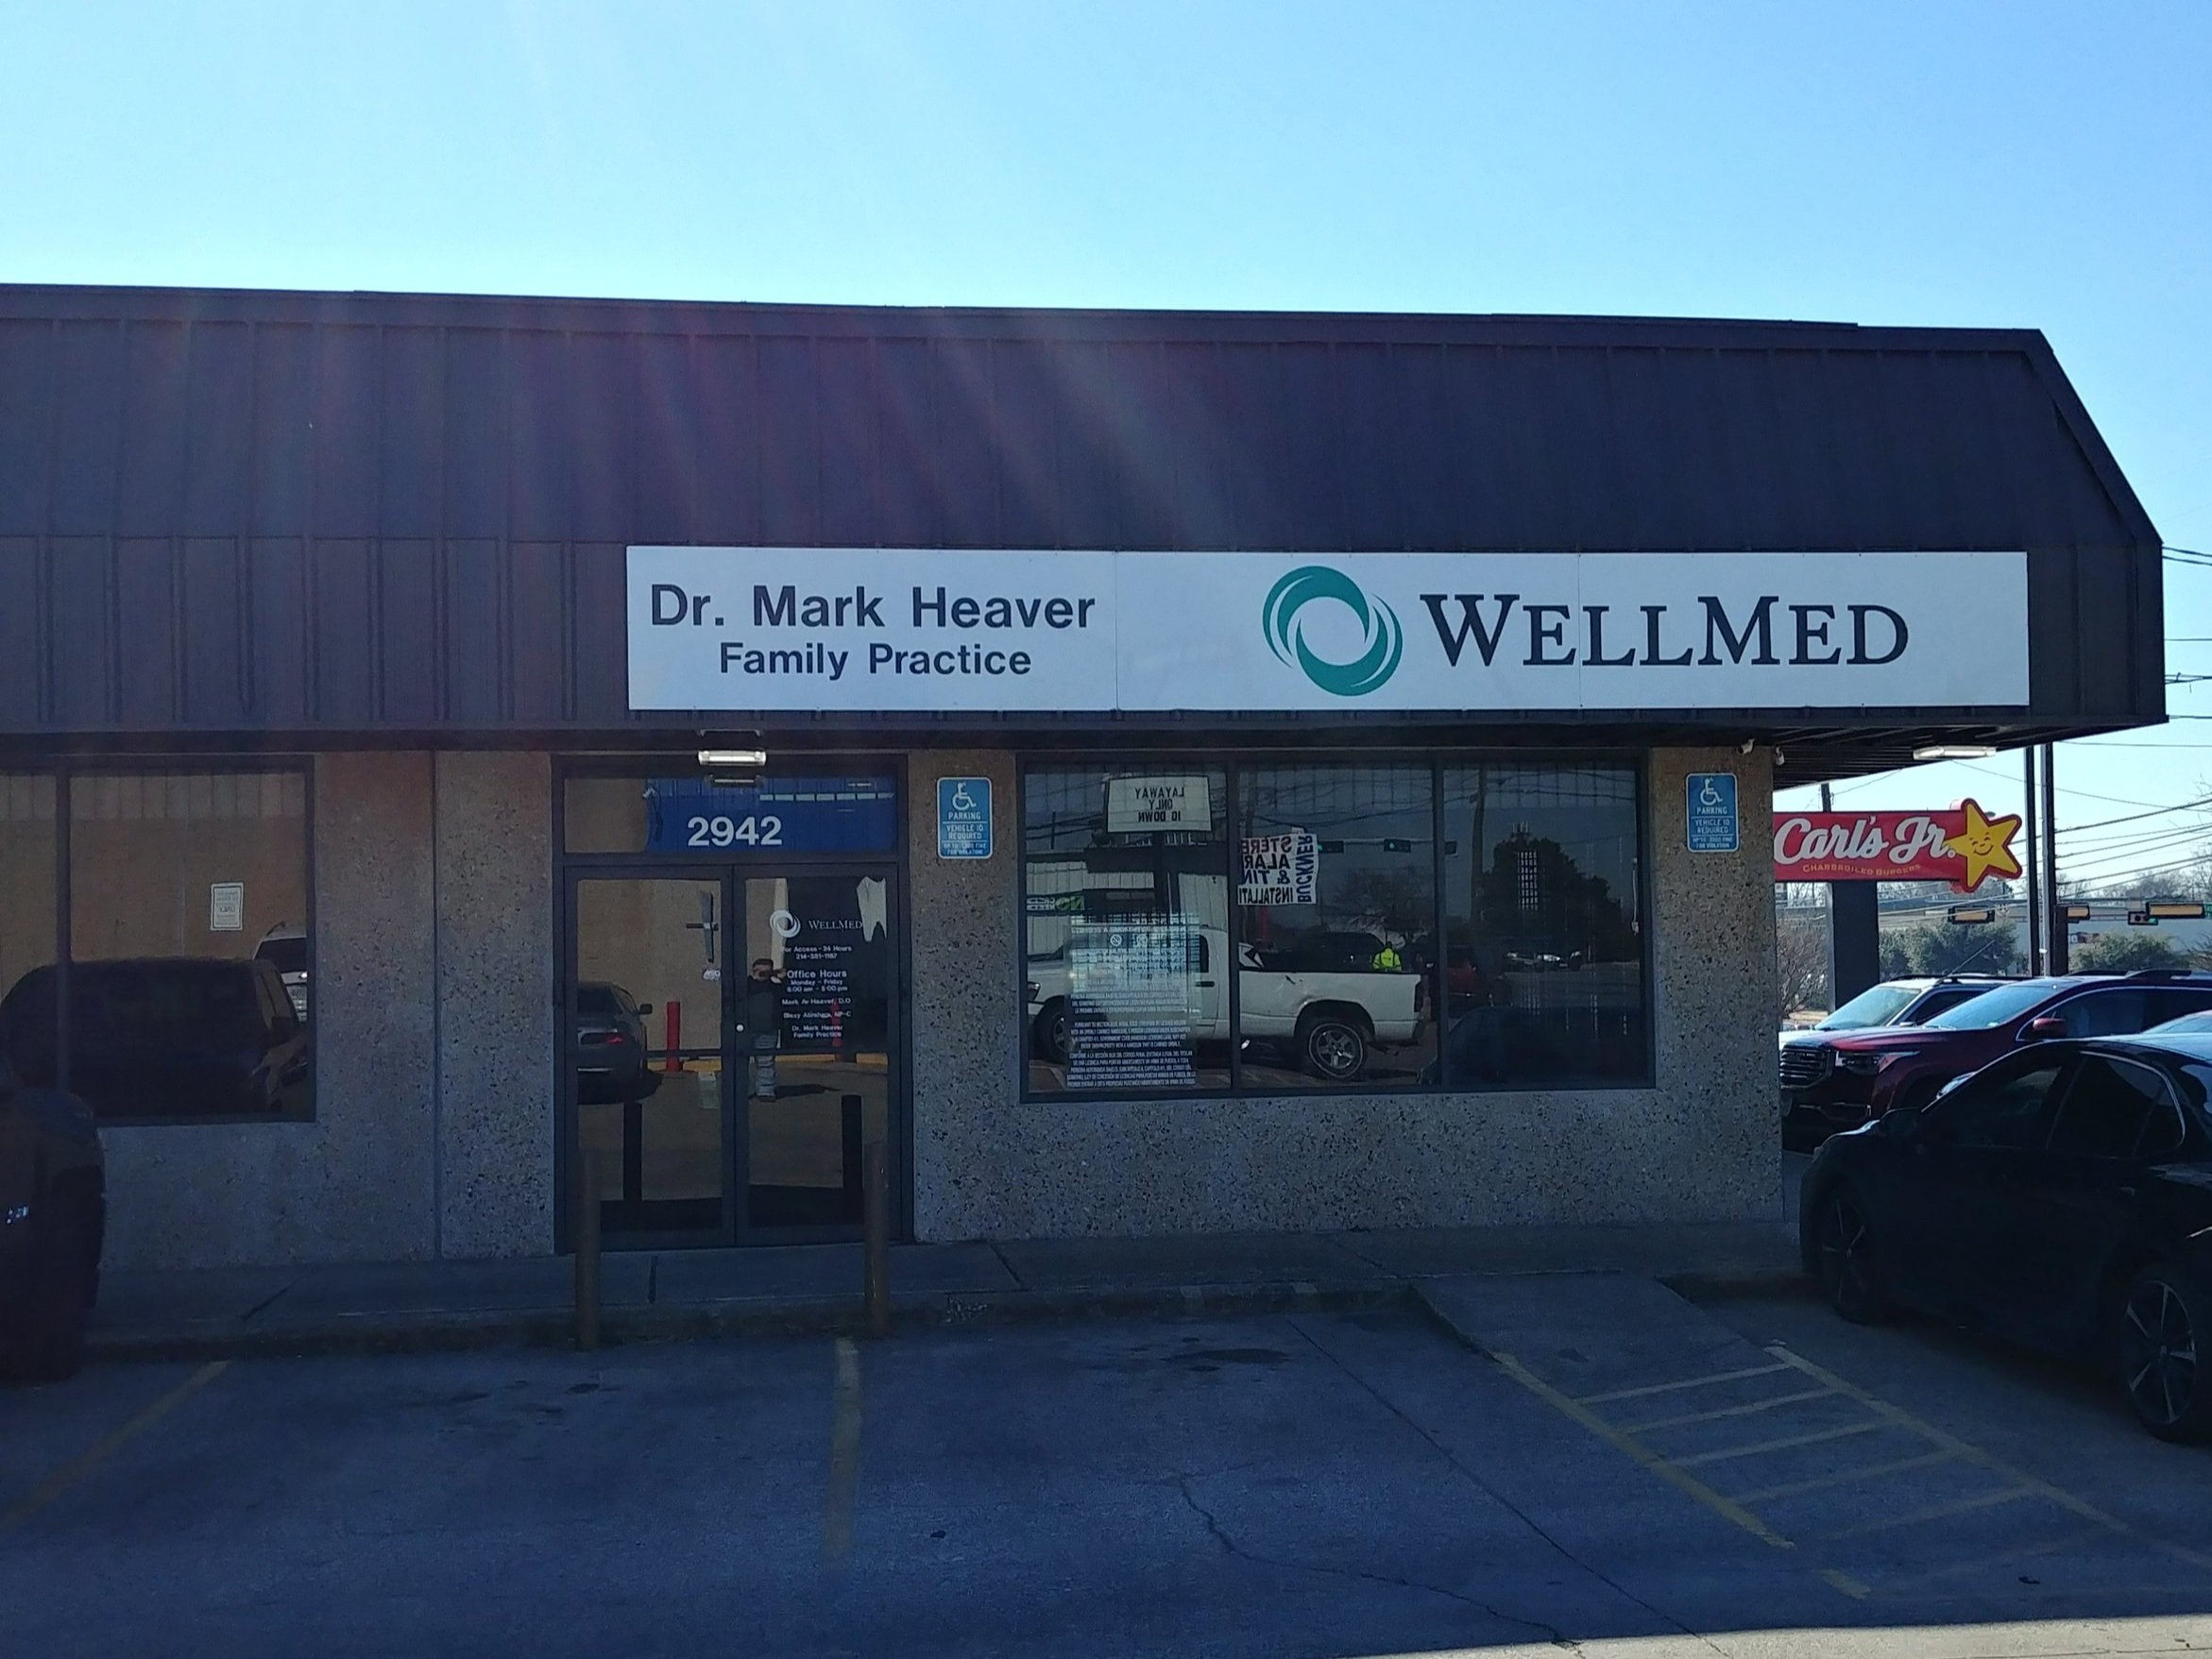  WellMed Medical - Dallas, TX  Medical Office Remodel 